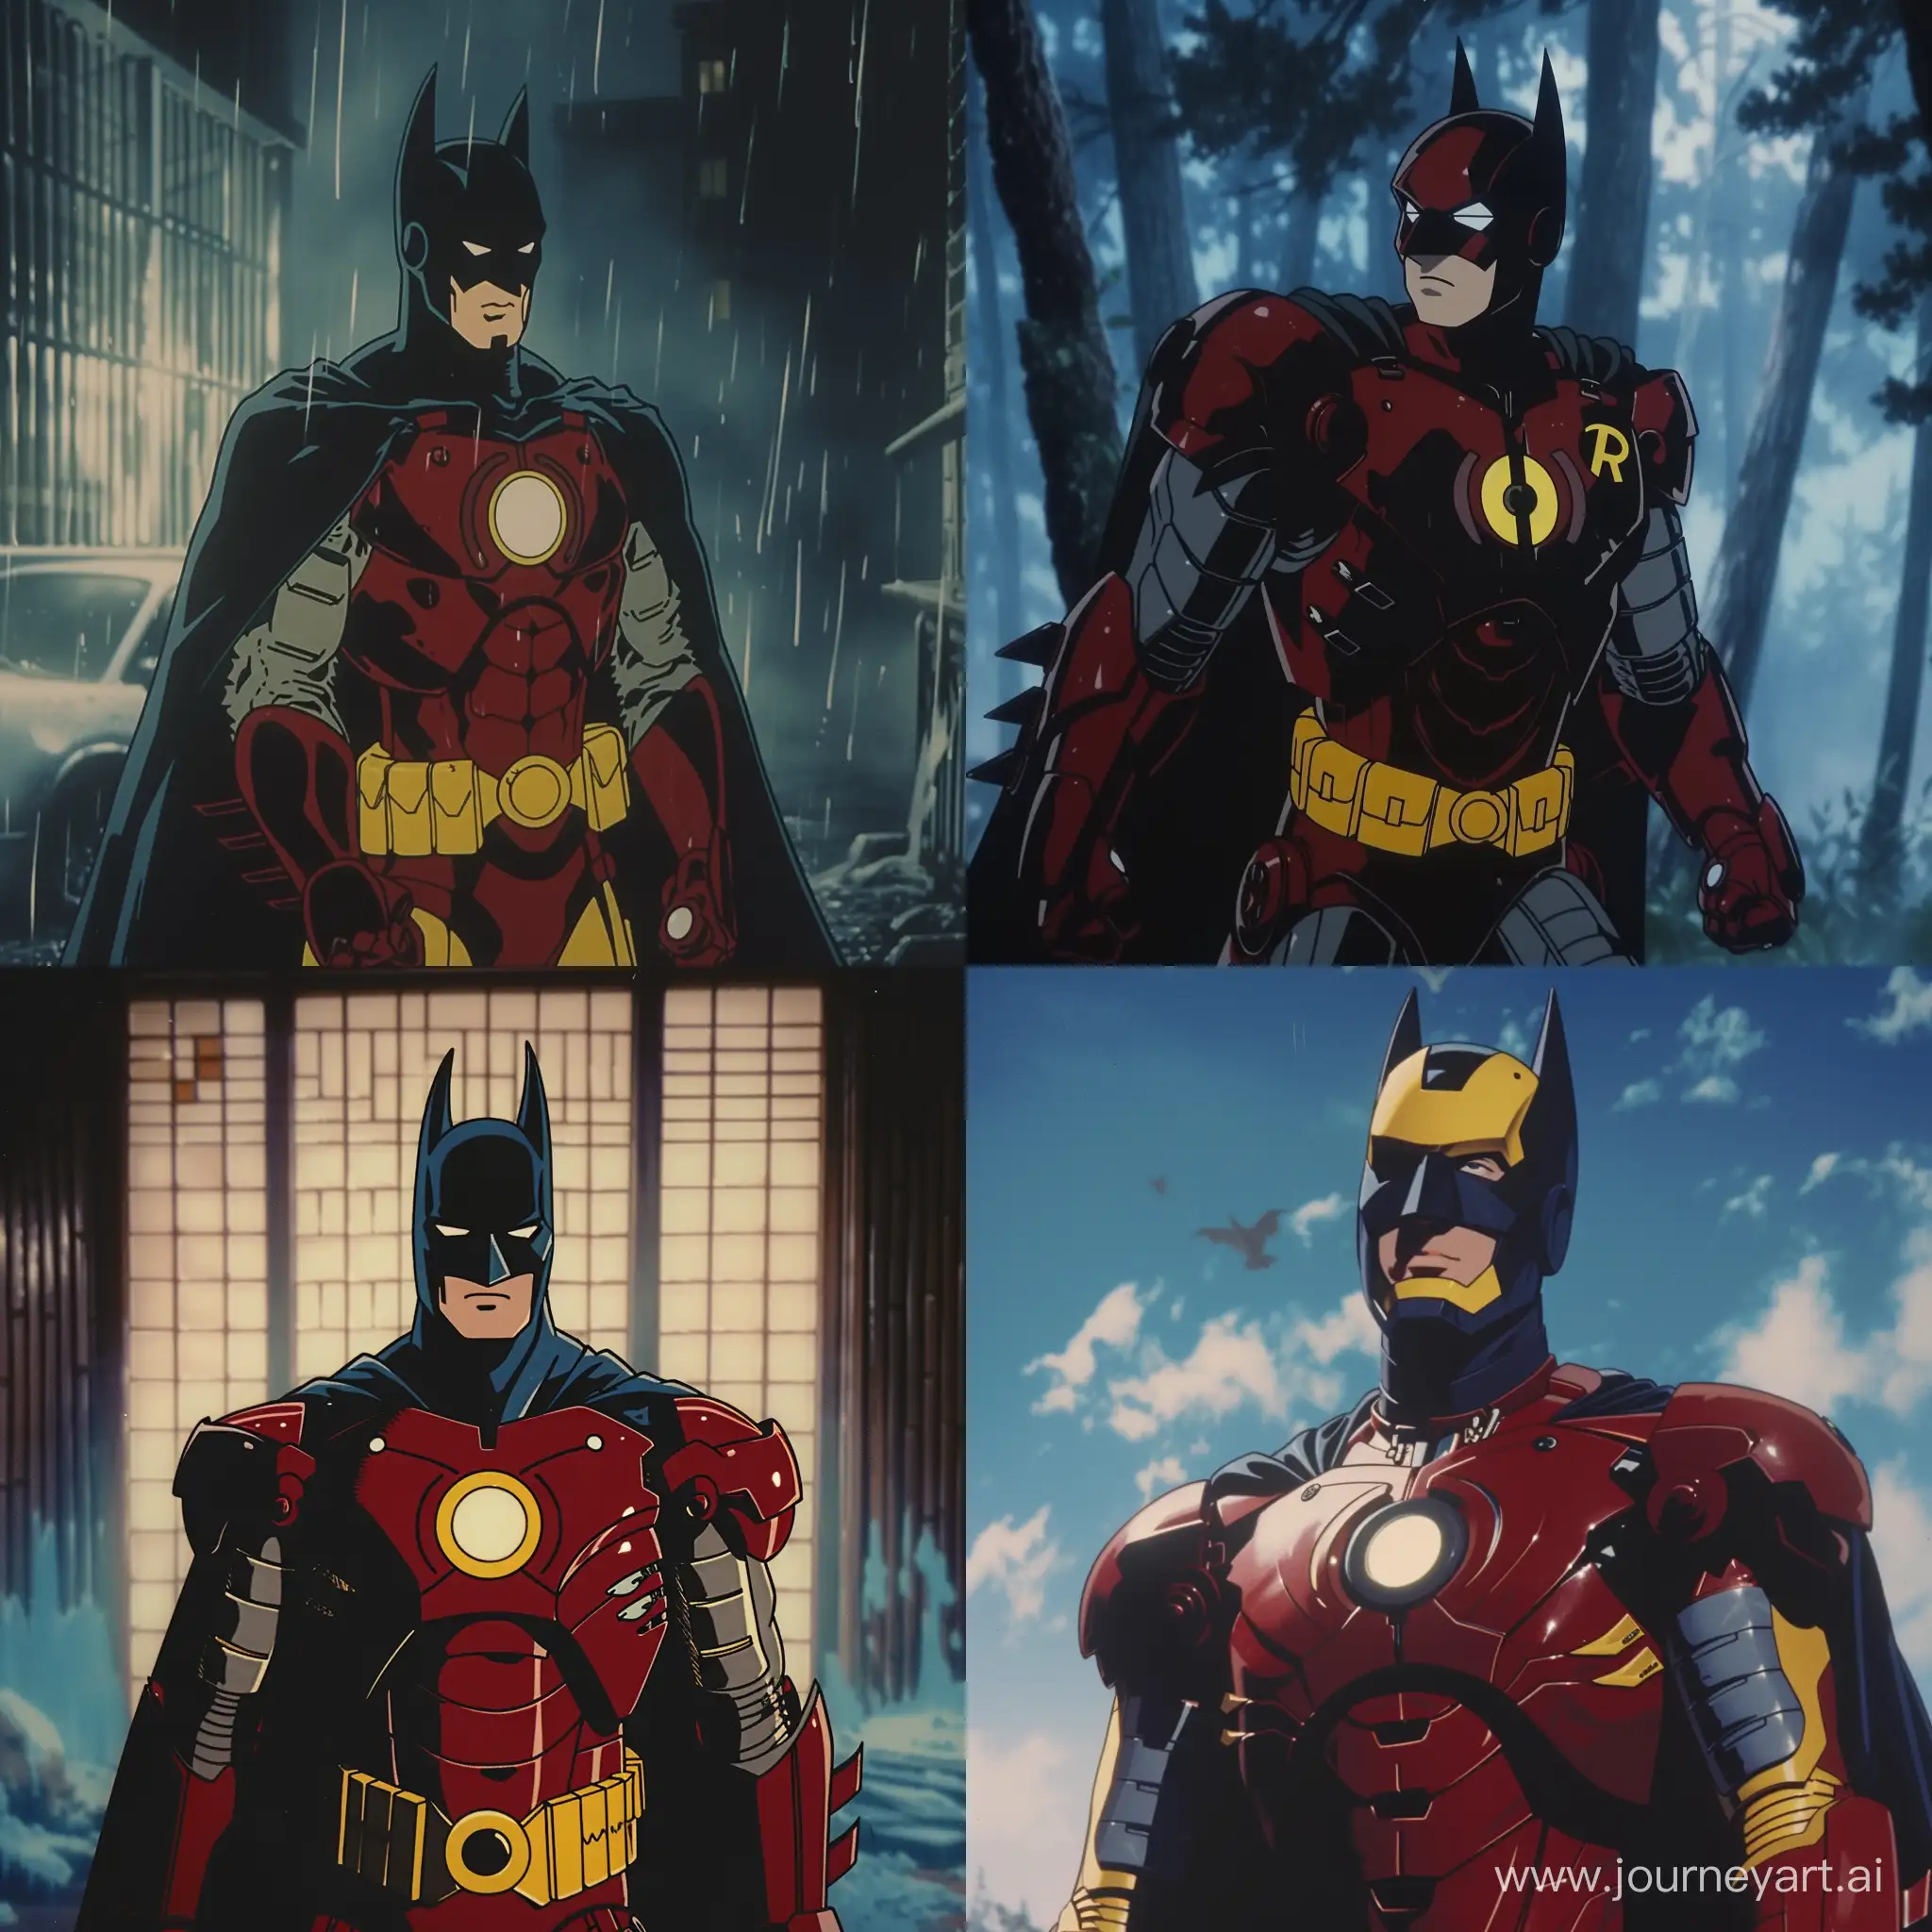 1980s-Anime-Aesthetic-Batman-in-Iron-Man-Costume